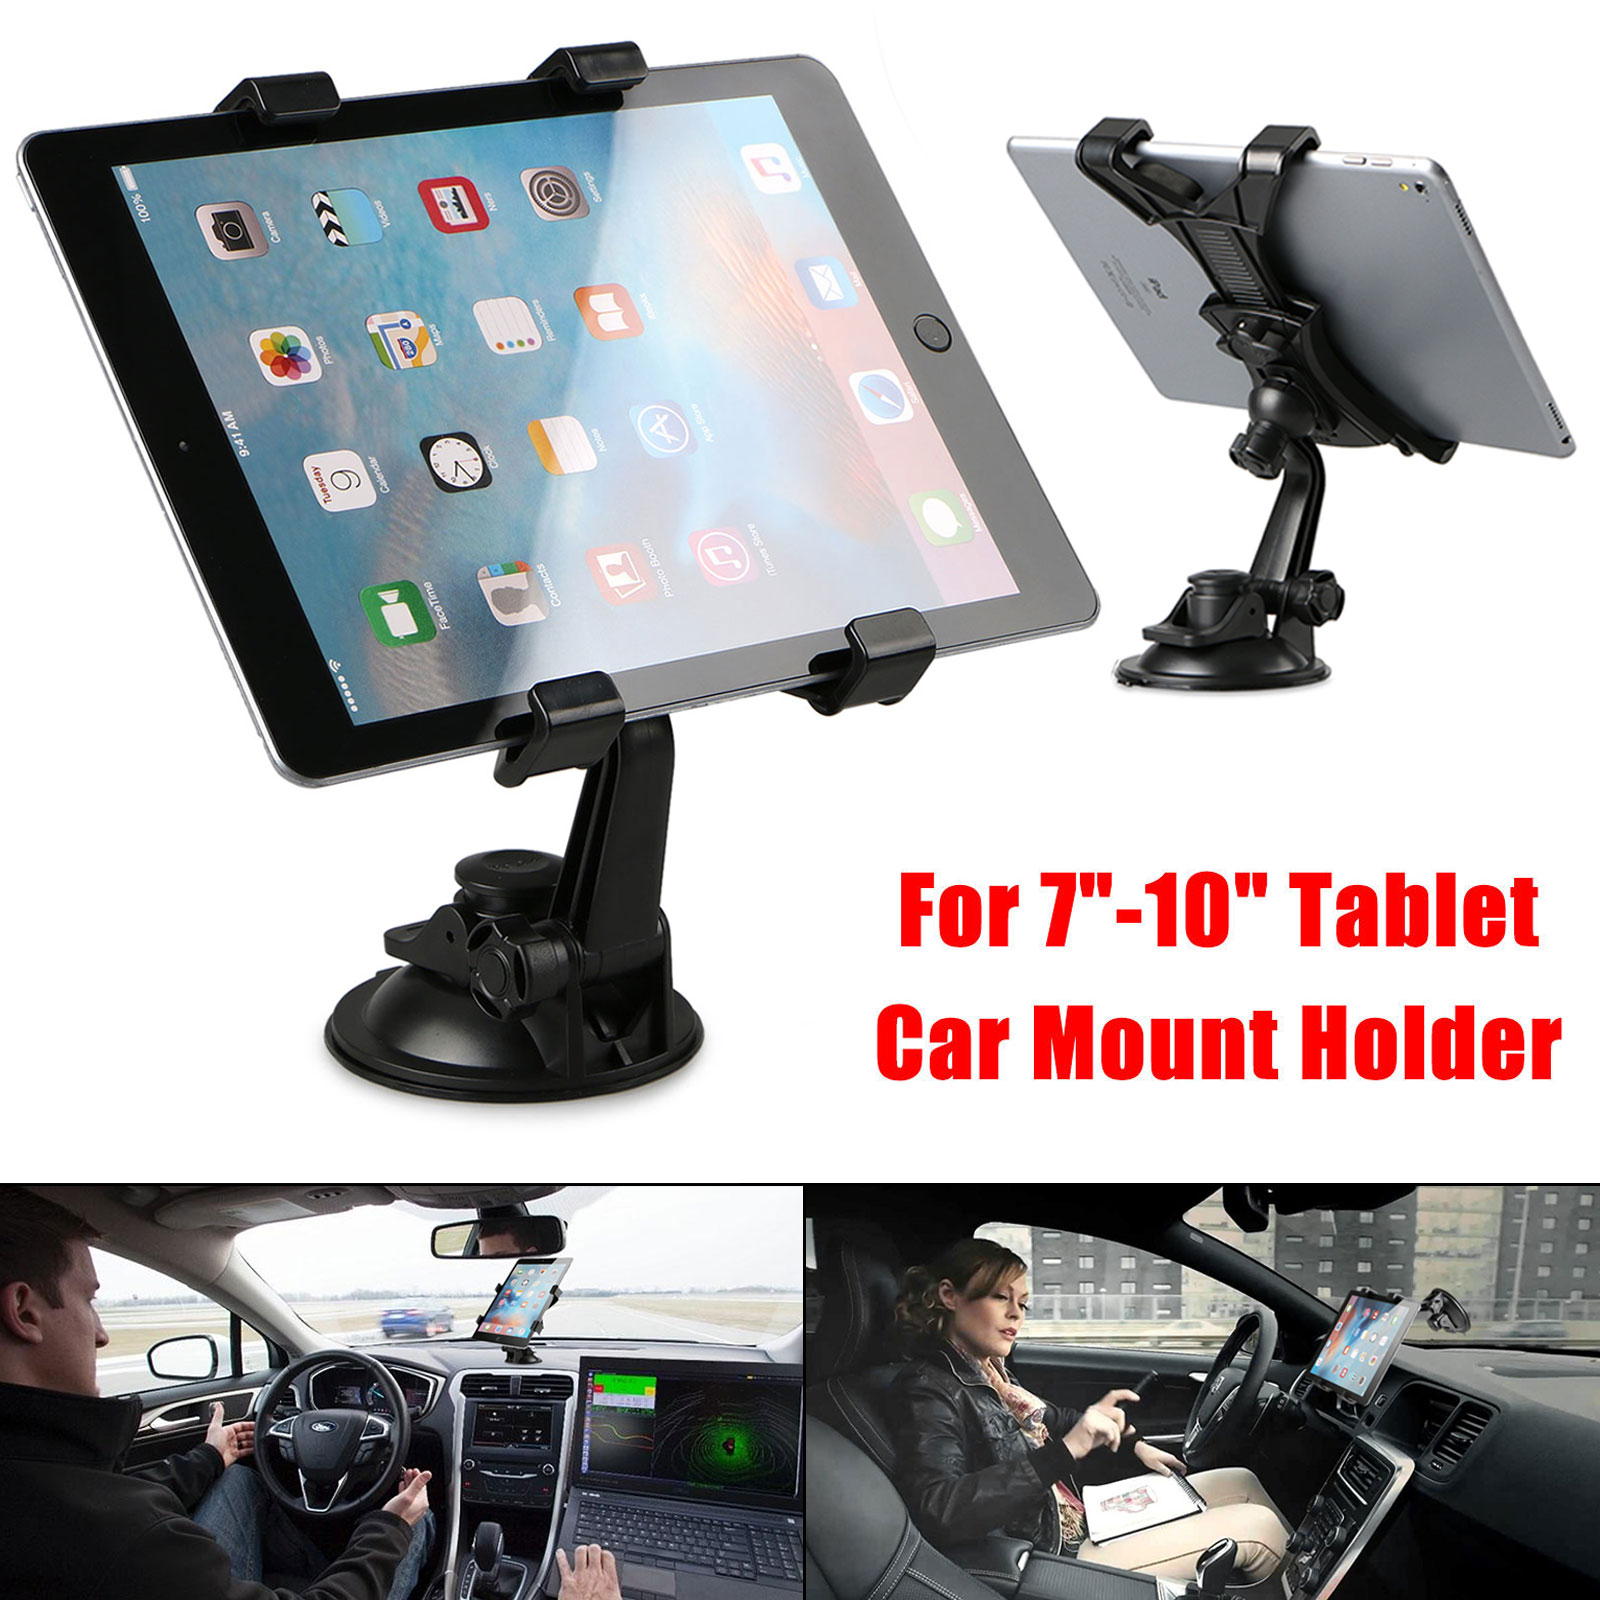 New Car Windshield Desk Holder Mount Suction Bracket Stand For 7-10" Tablet iPad